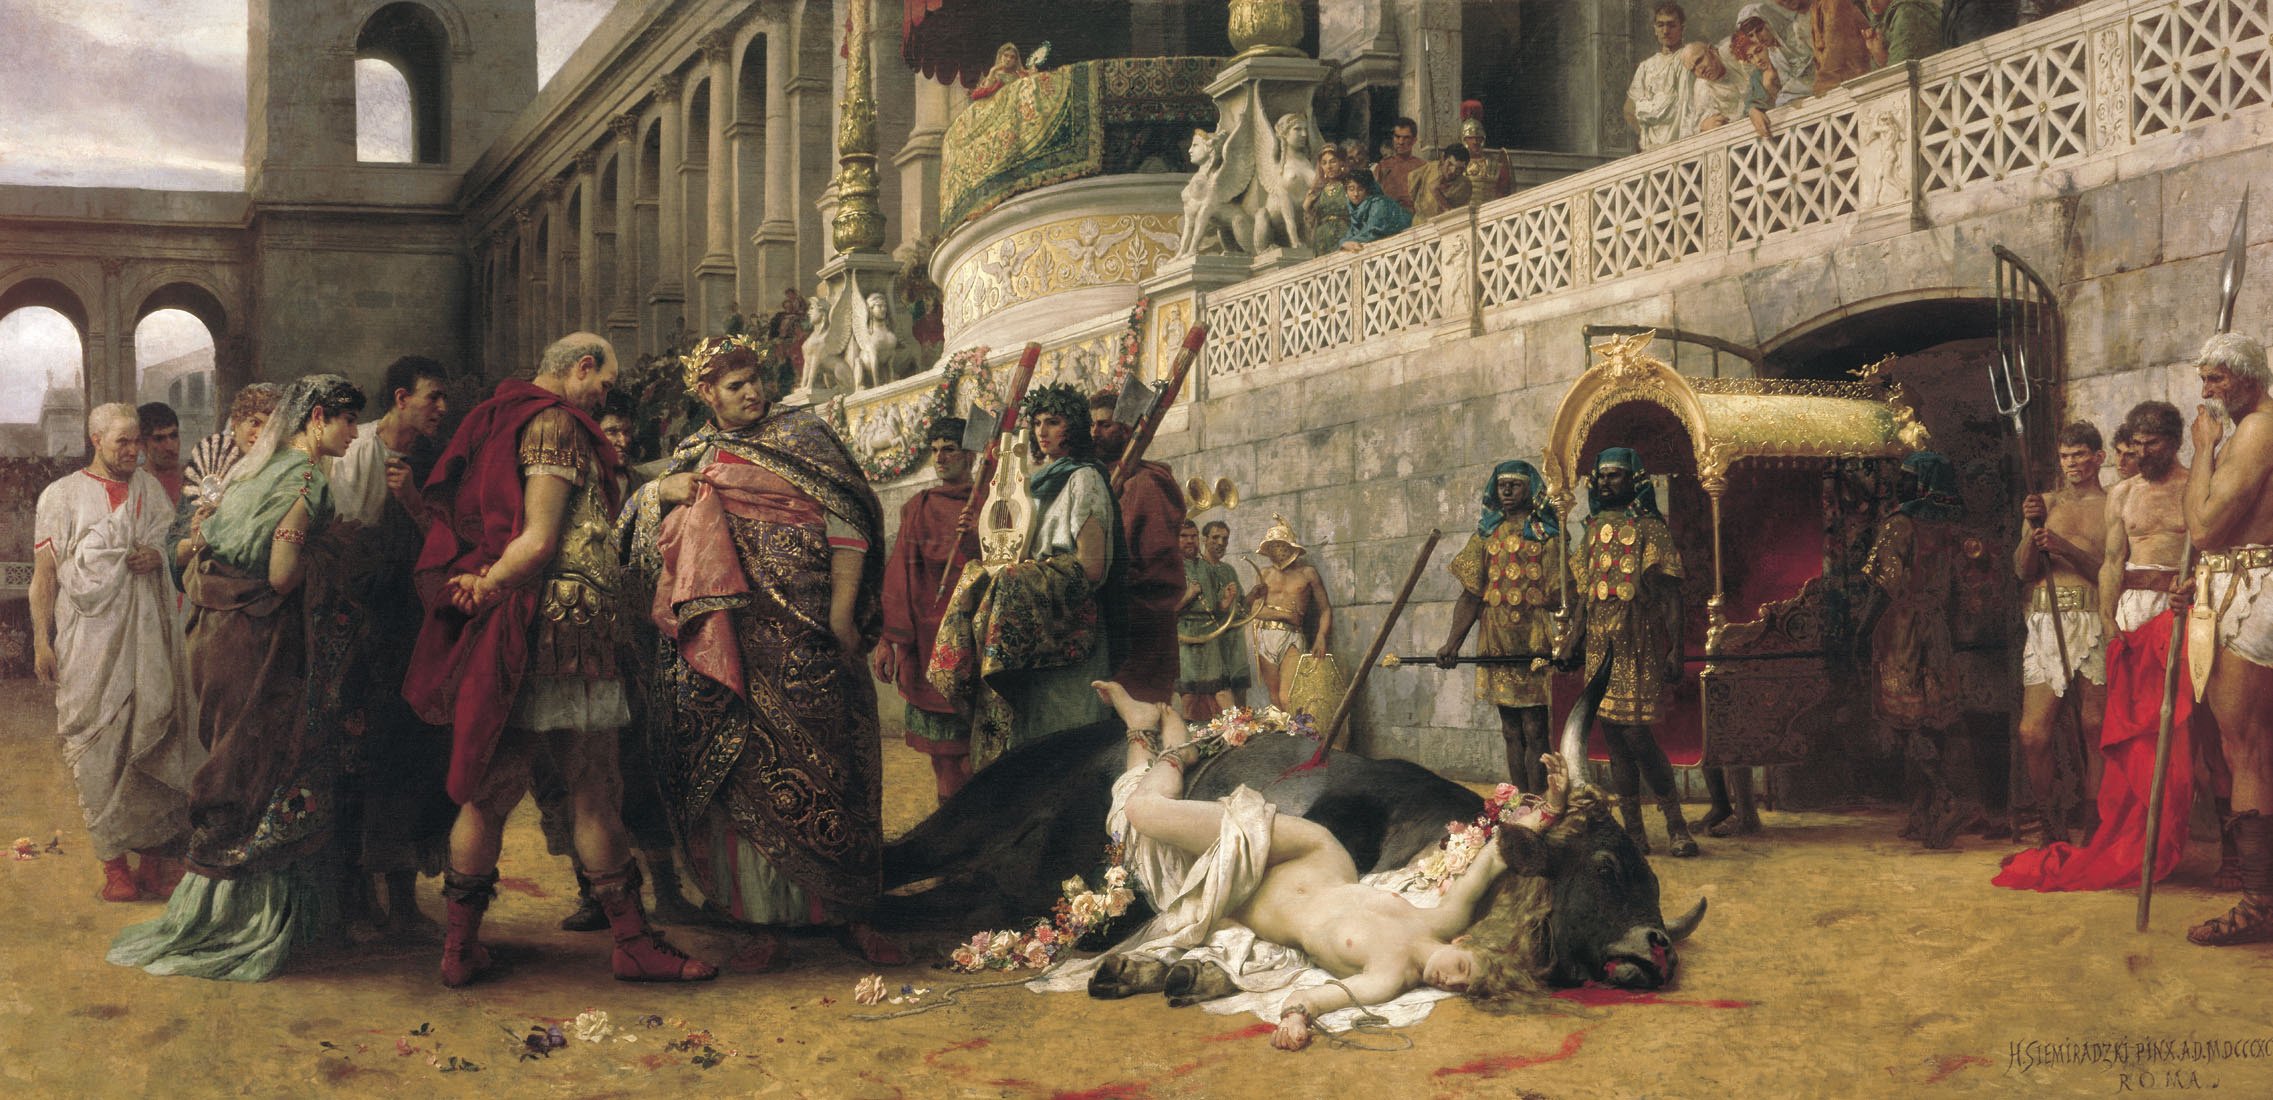 The Feast of Apollo. Virgo is a victim. Semiradsky